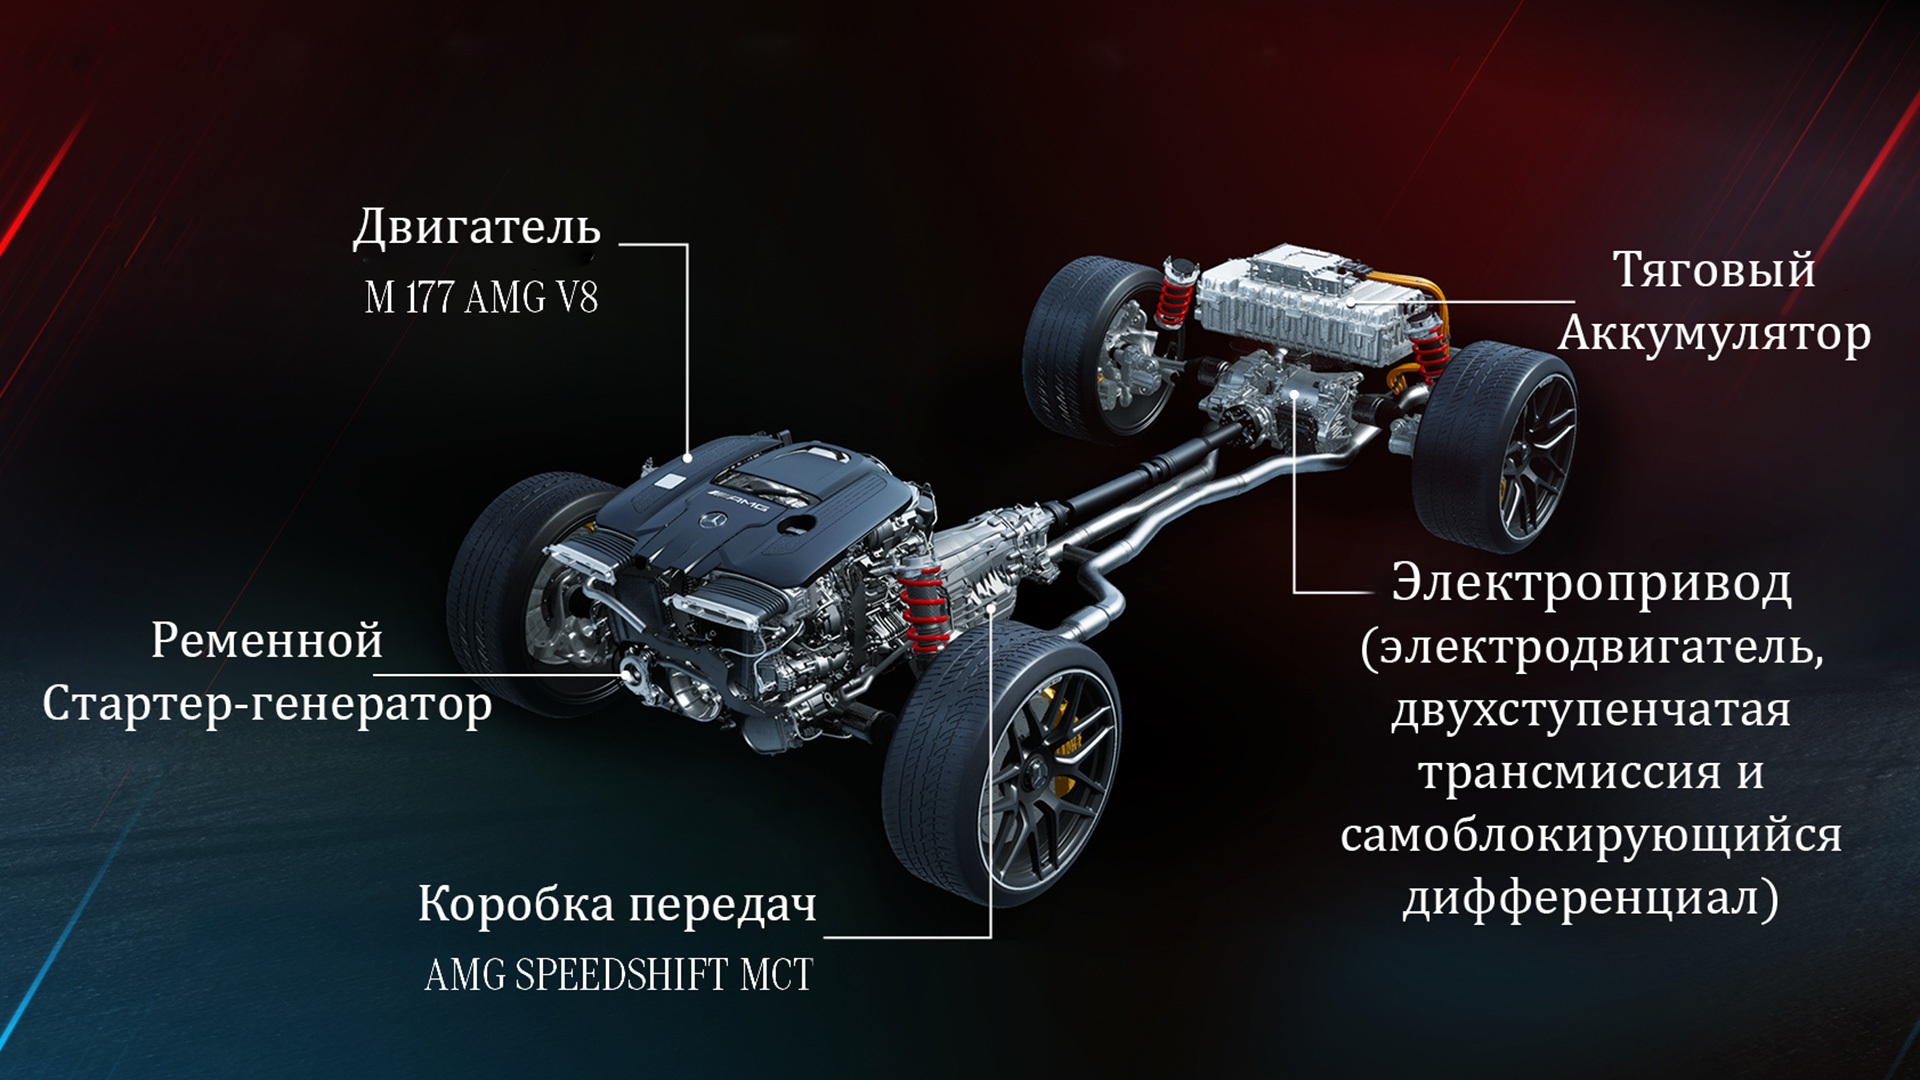 mercedes-amg e performance V8